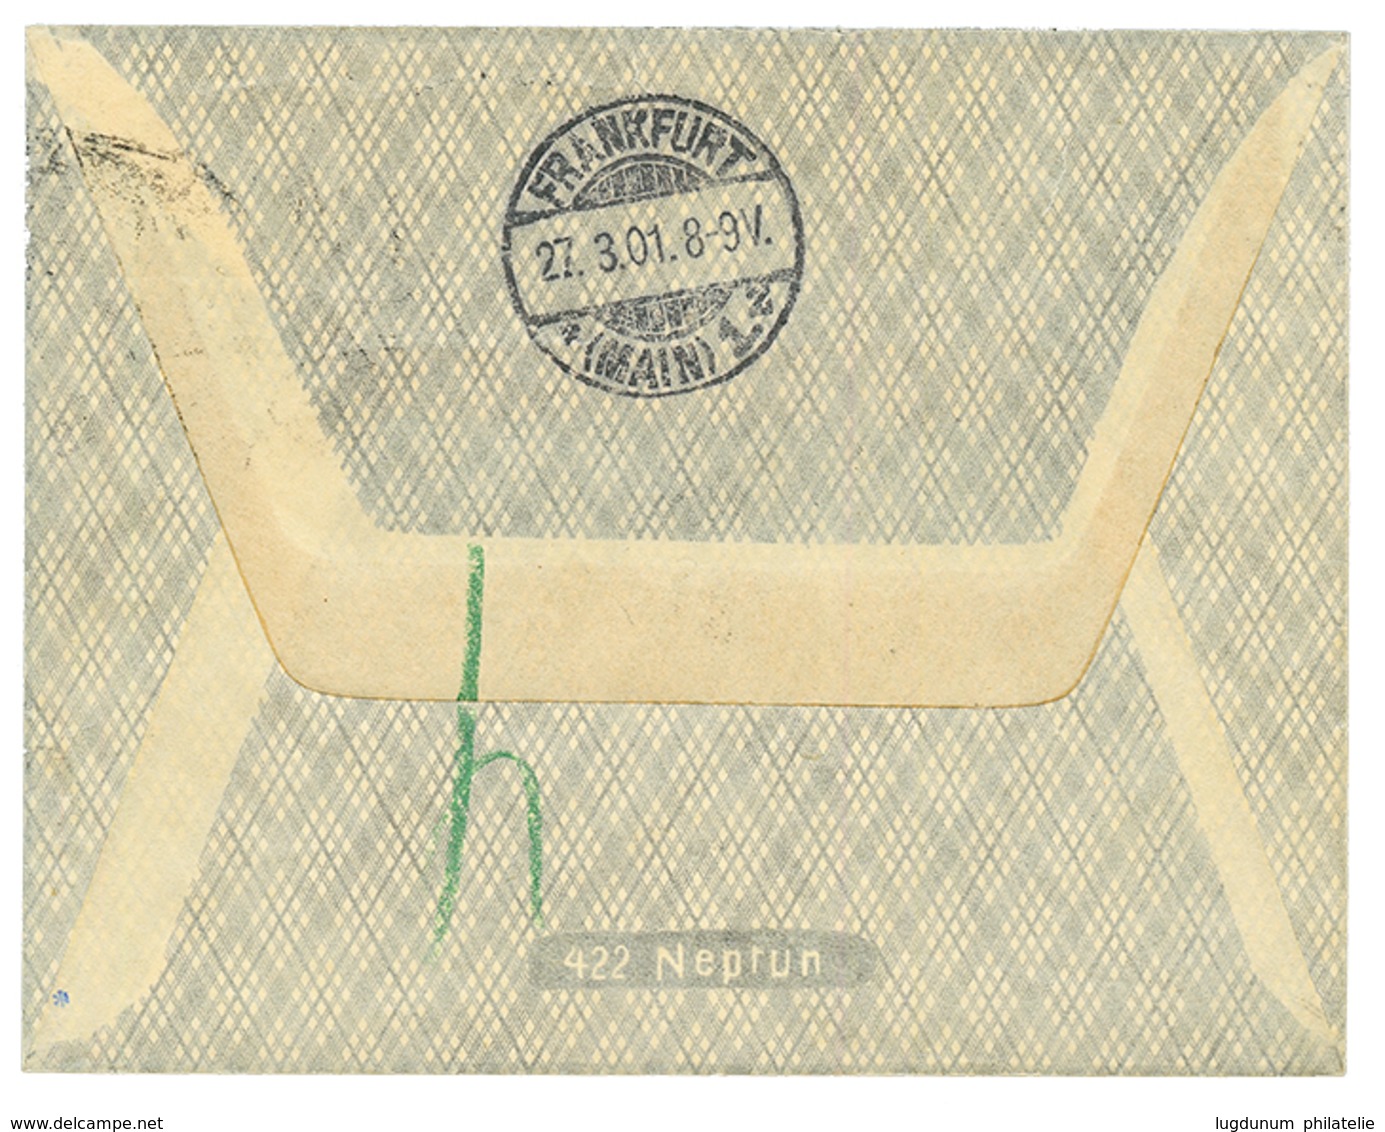 VORLAUFER : 1901 10pf + 20pf Canc. YAP KAROLINEN On REGISTERED Envelope To GERMANY. Vvf. - Caroline Islands